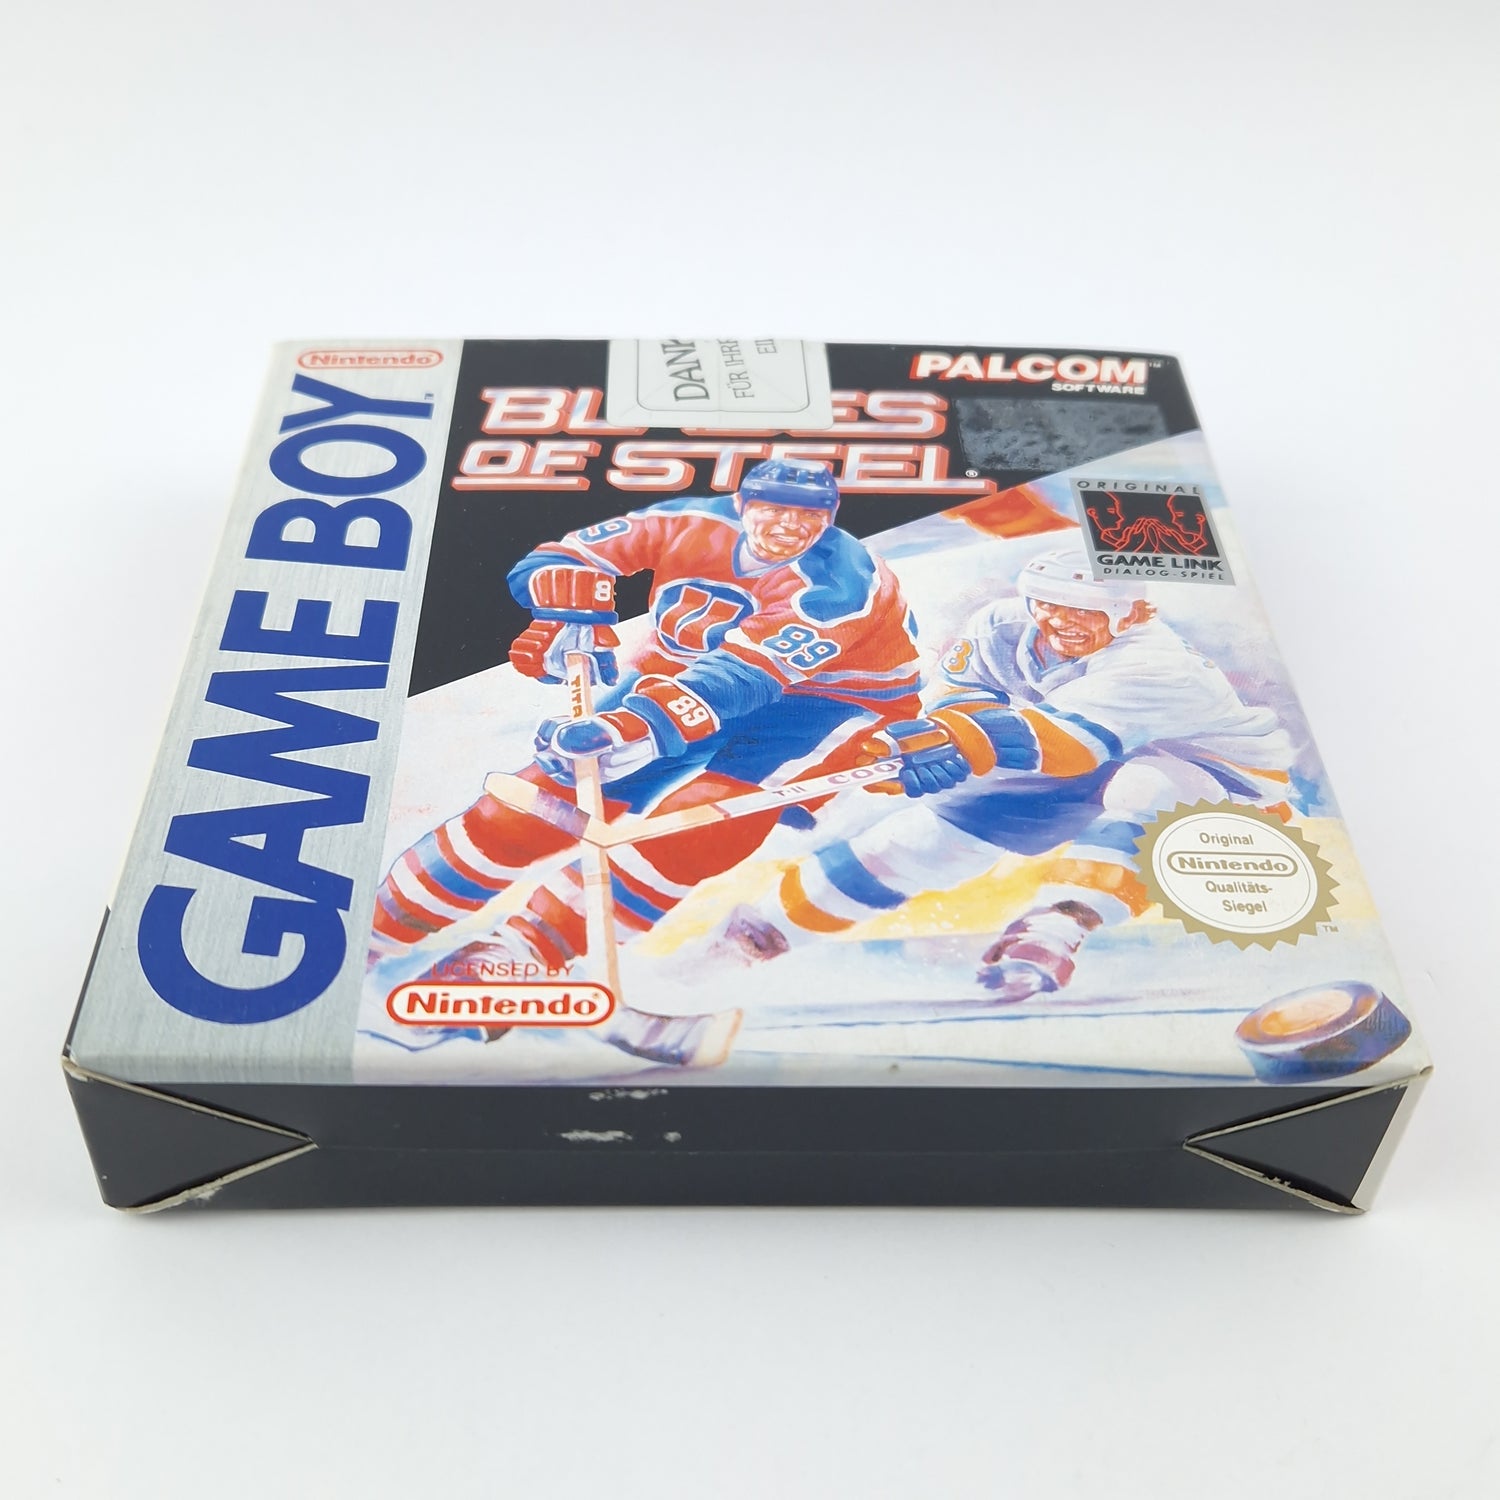 Nintendo Gameboy Game: Blades of Steel Icehockey - Game Boy Classic OVP NOE